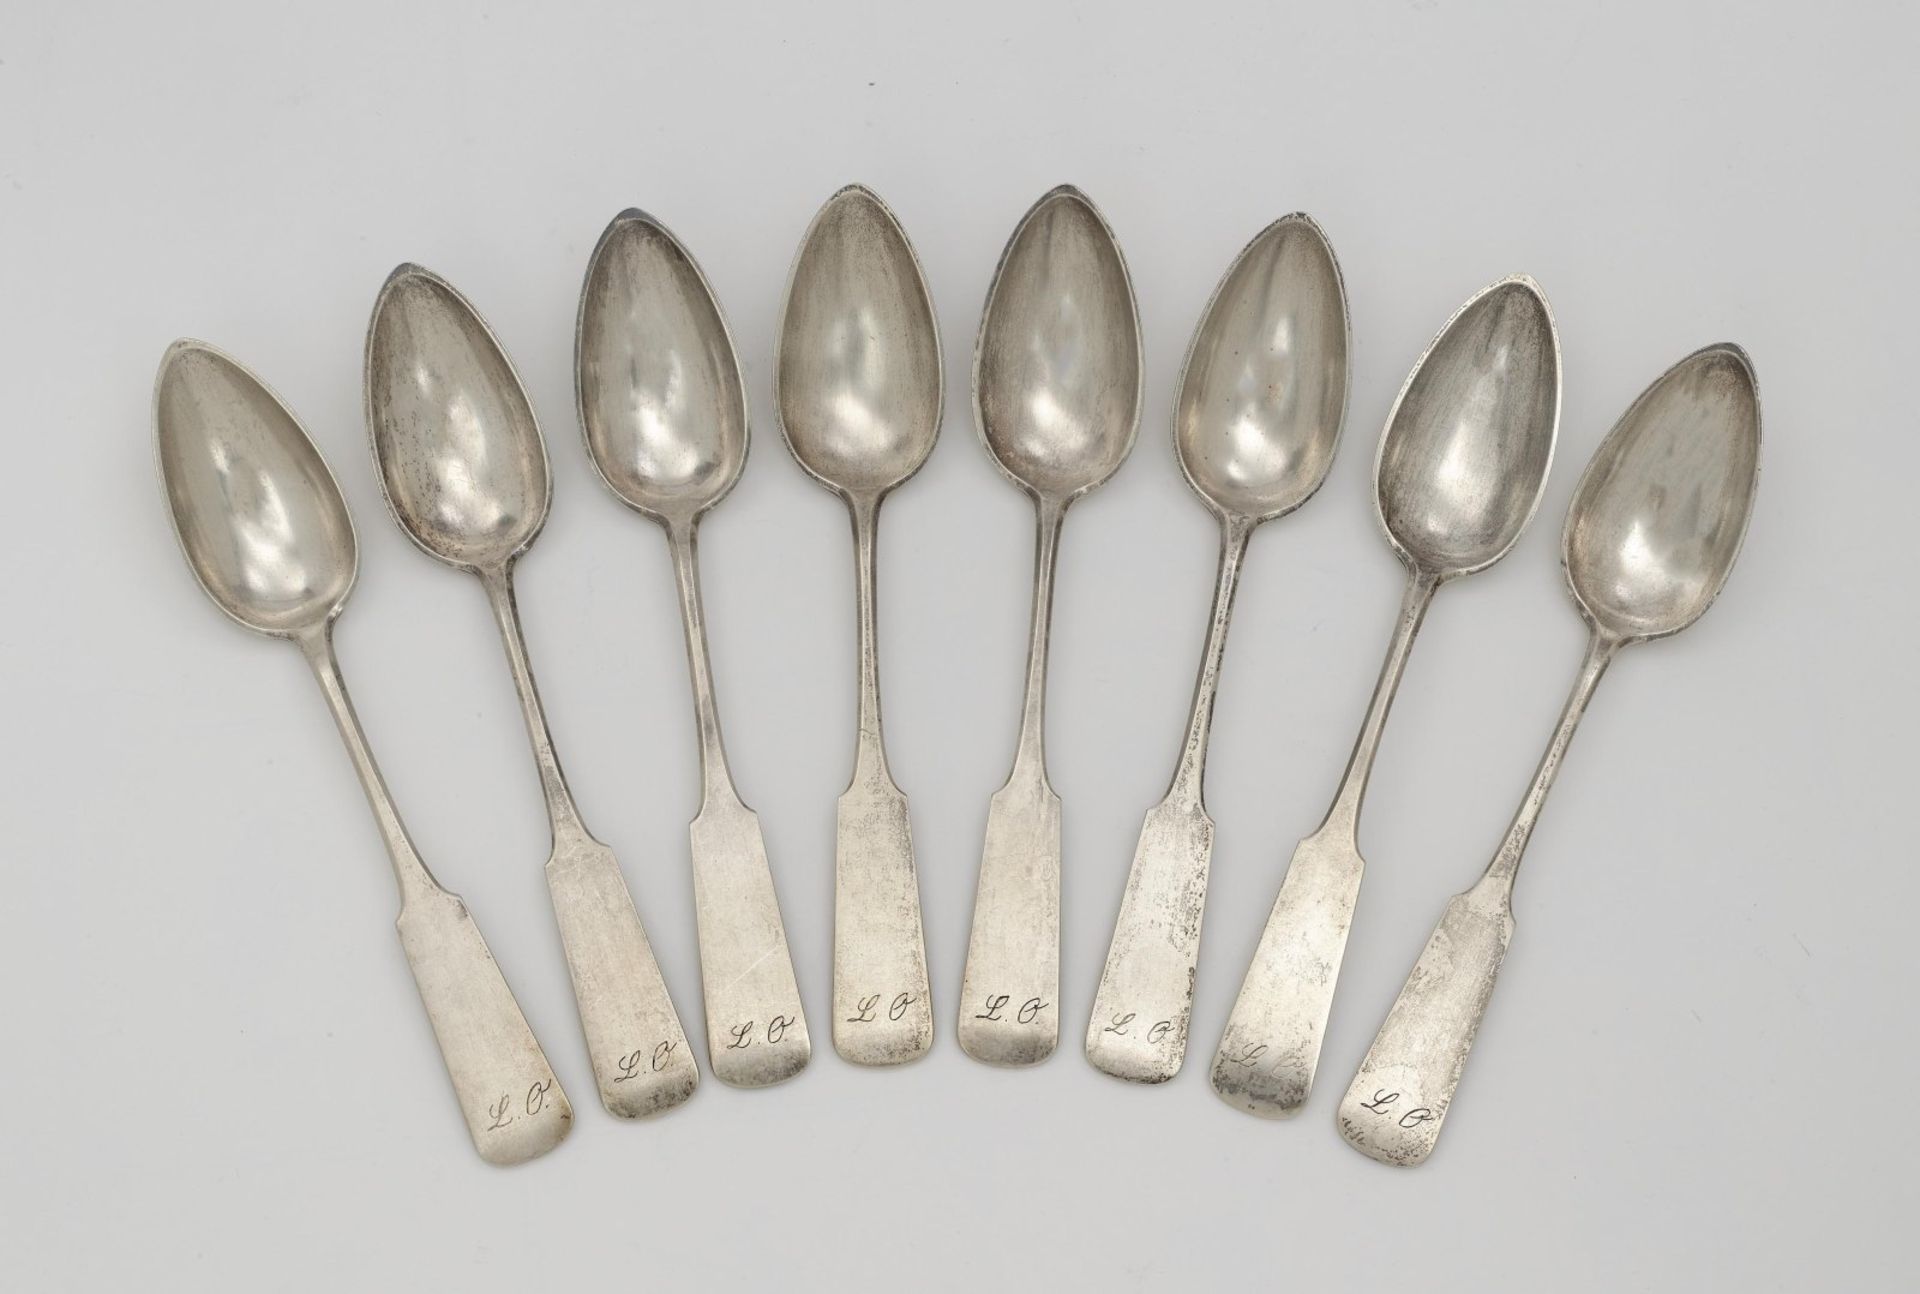 Eight spoons